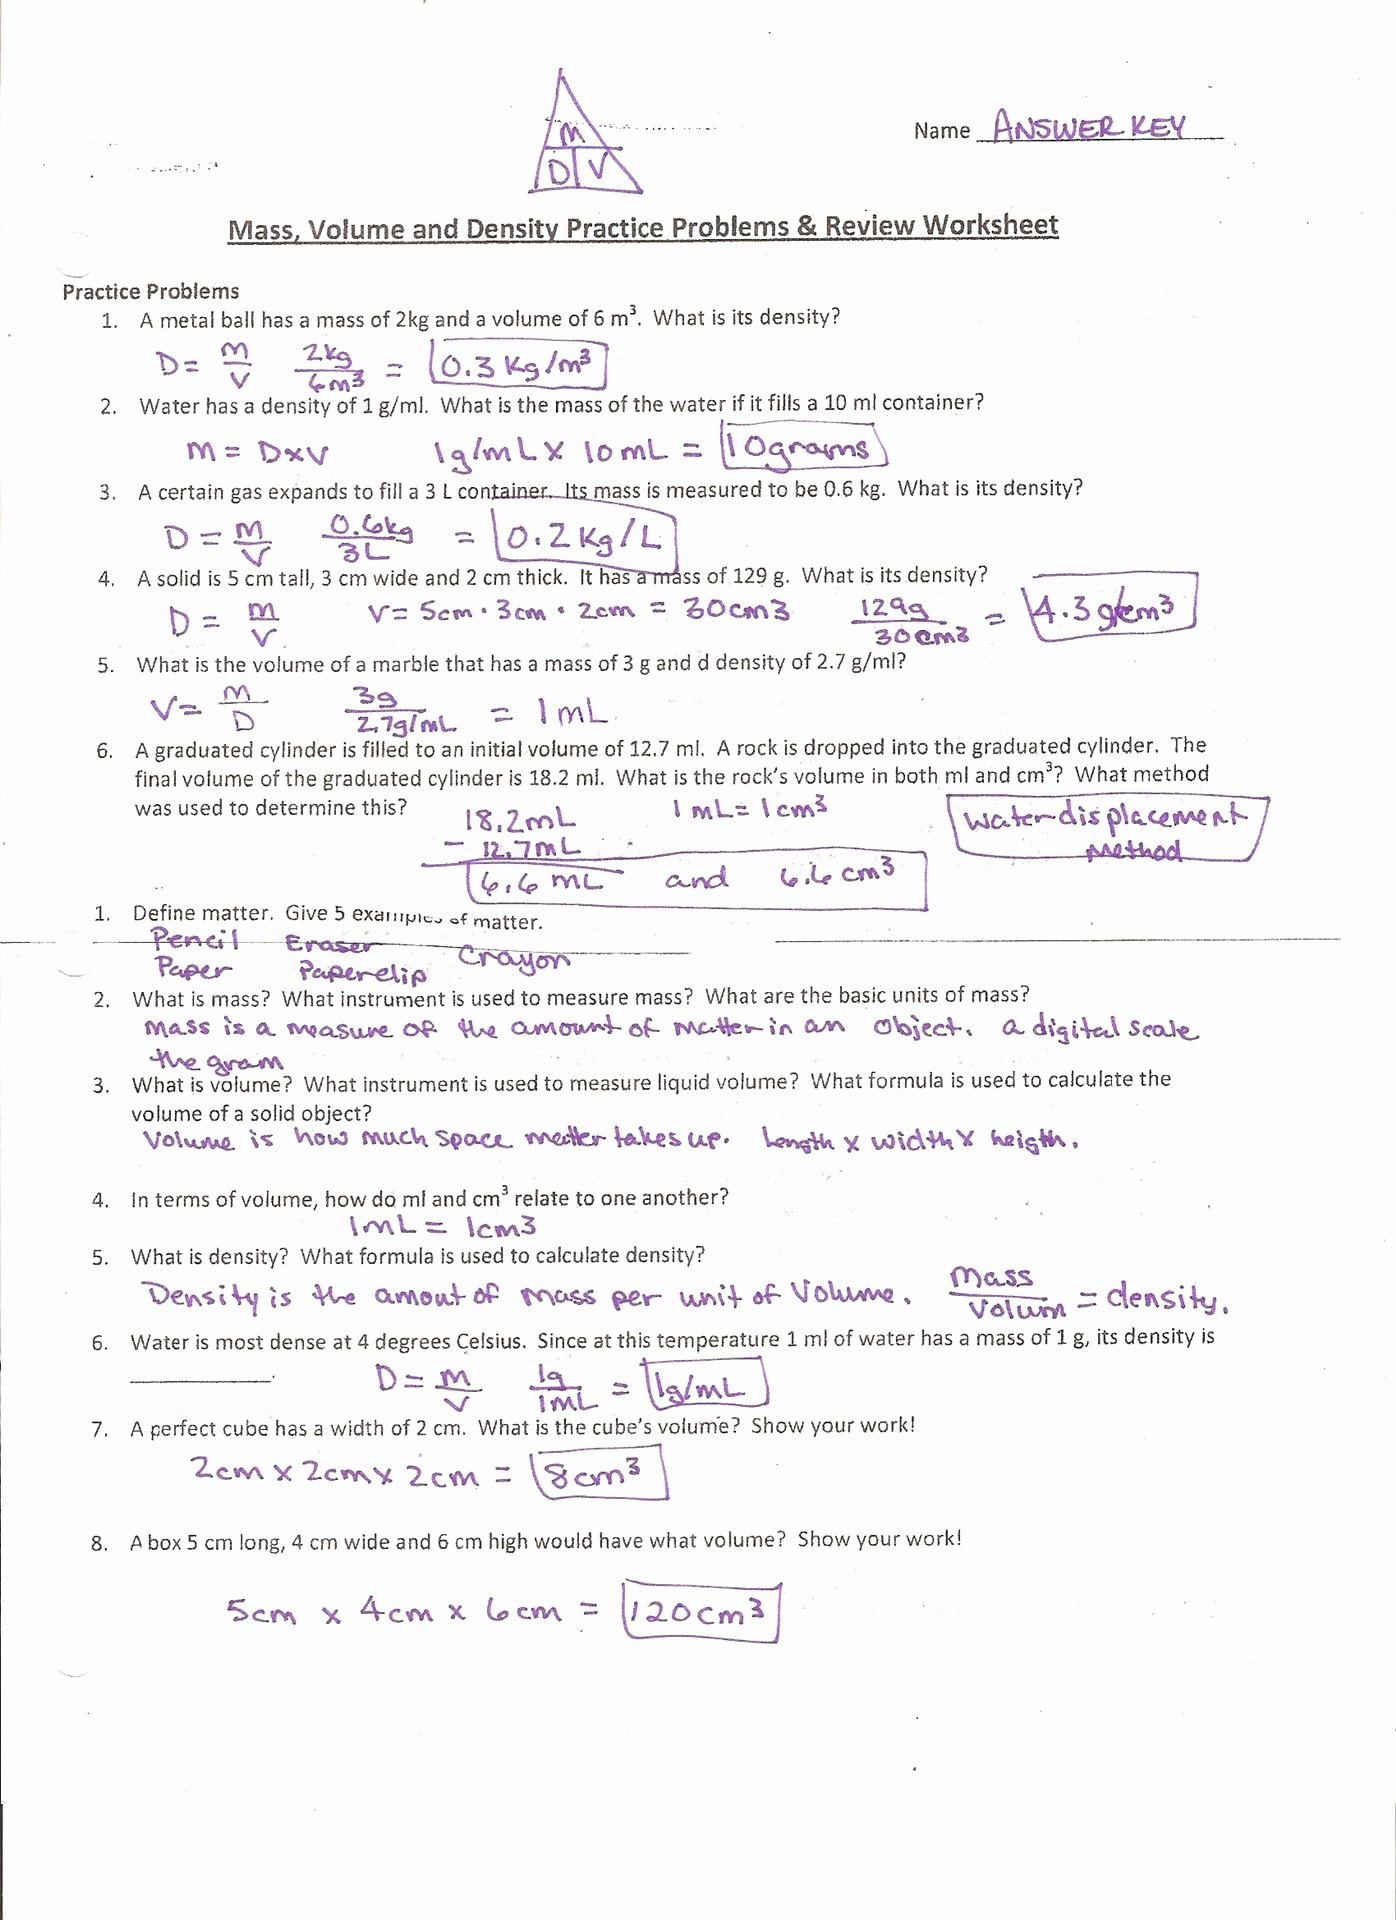 Density Practice Problem Worksheet Answers New Mass Volume Density Worksheet 5th Grade the Best